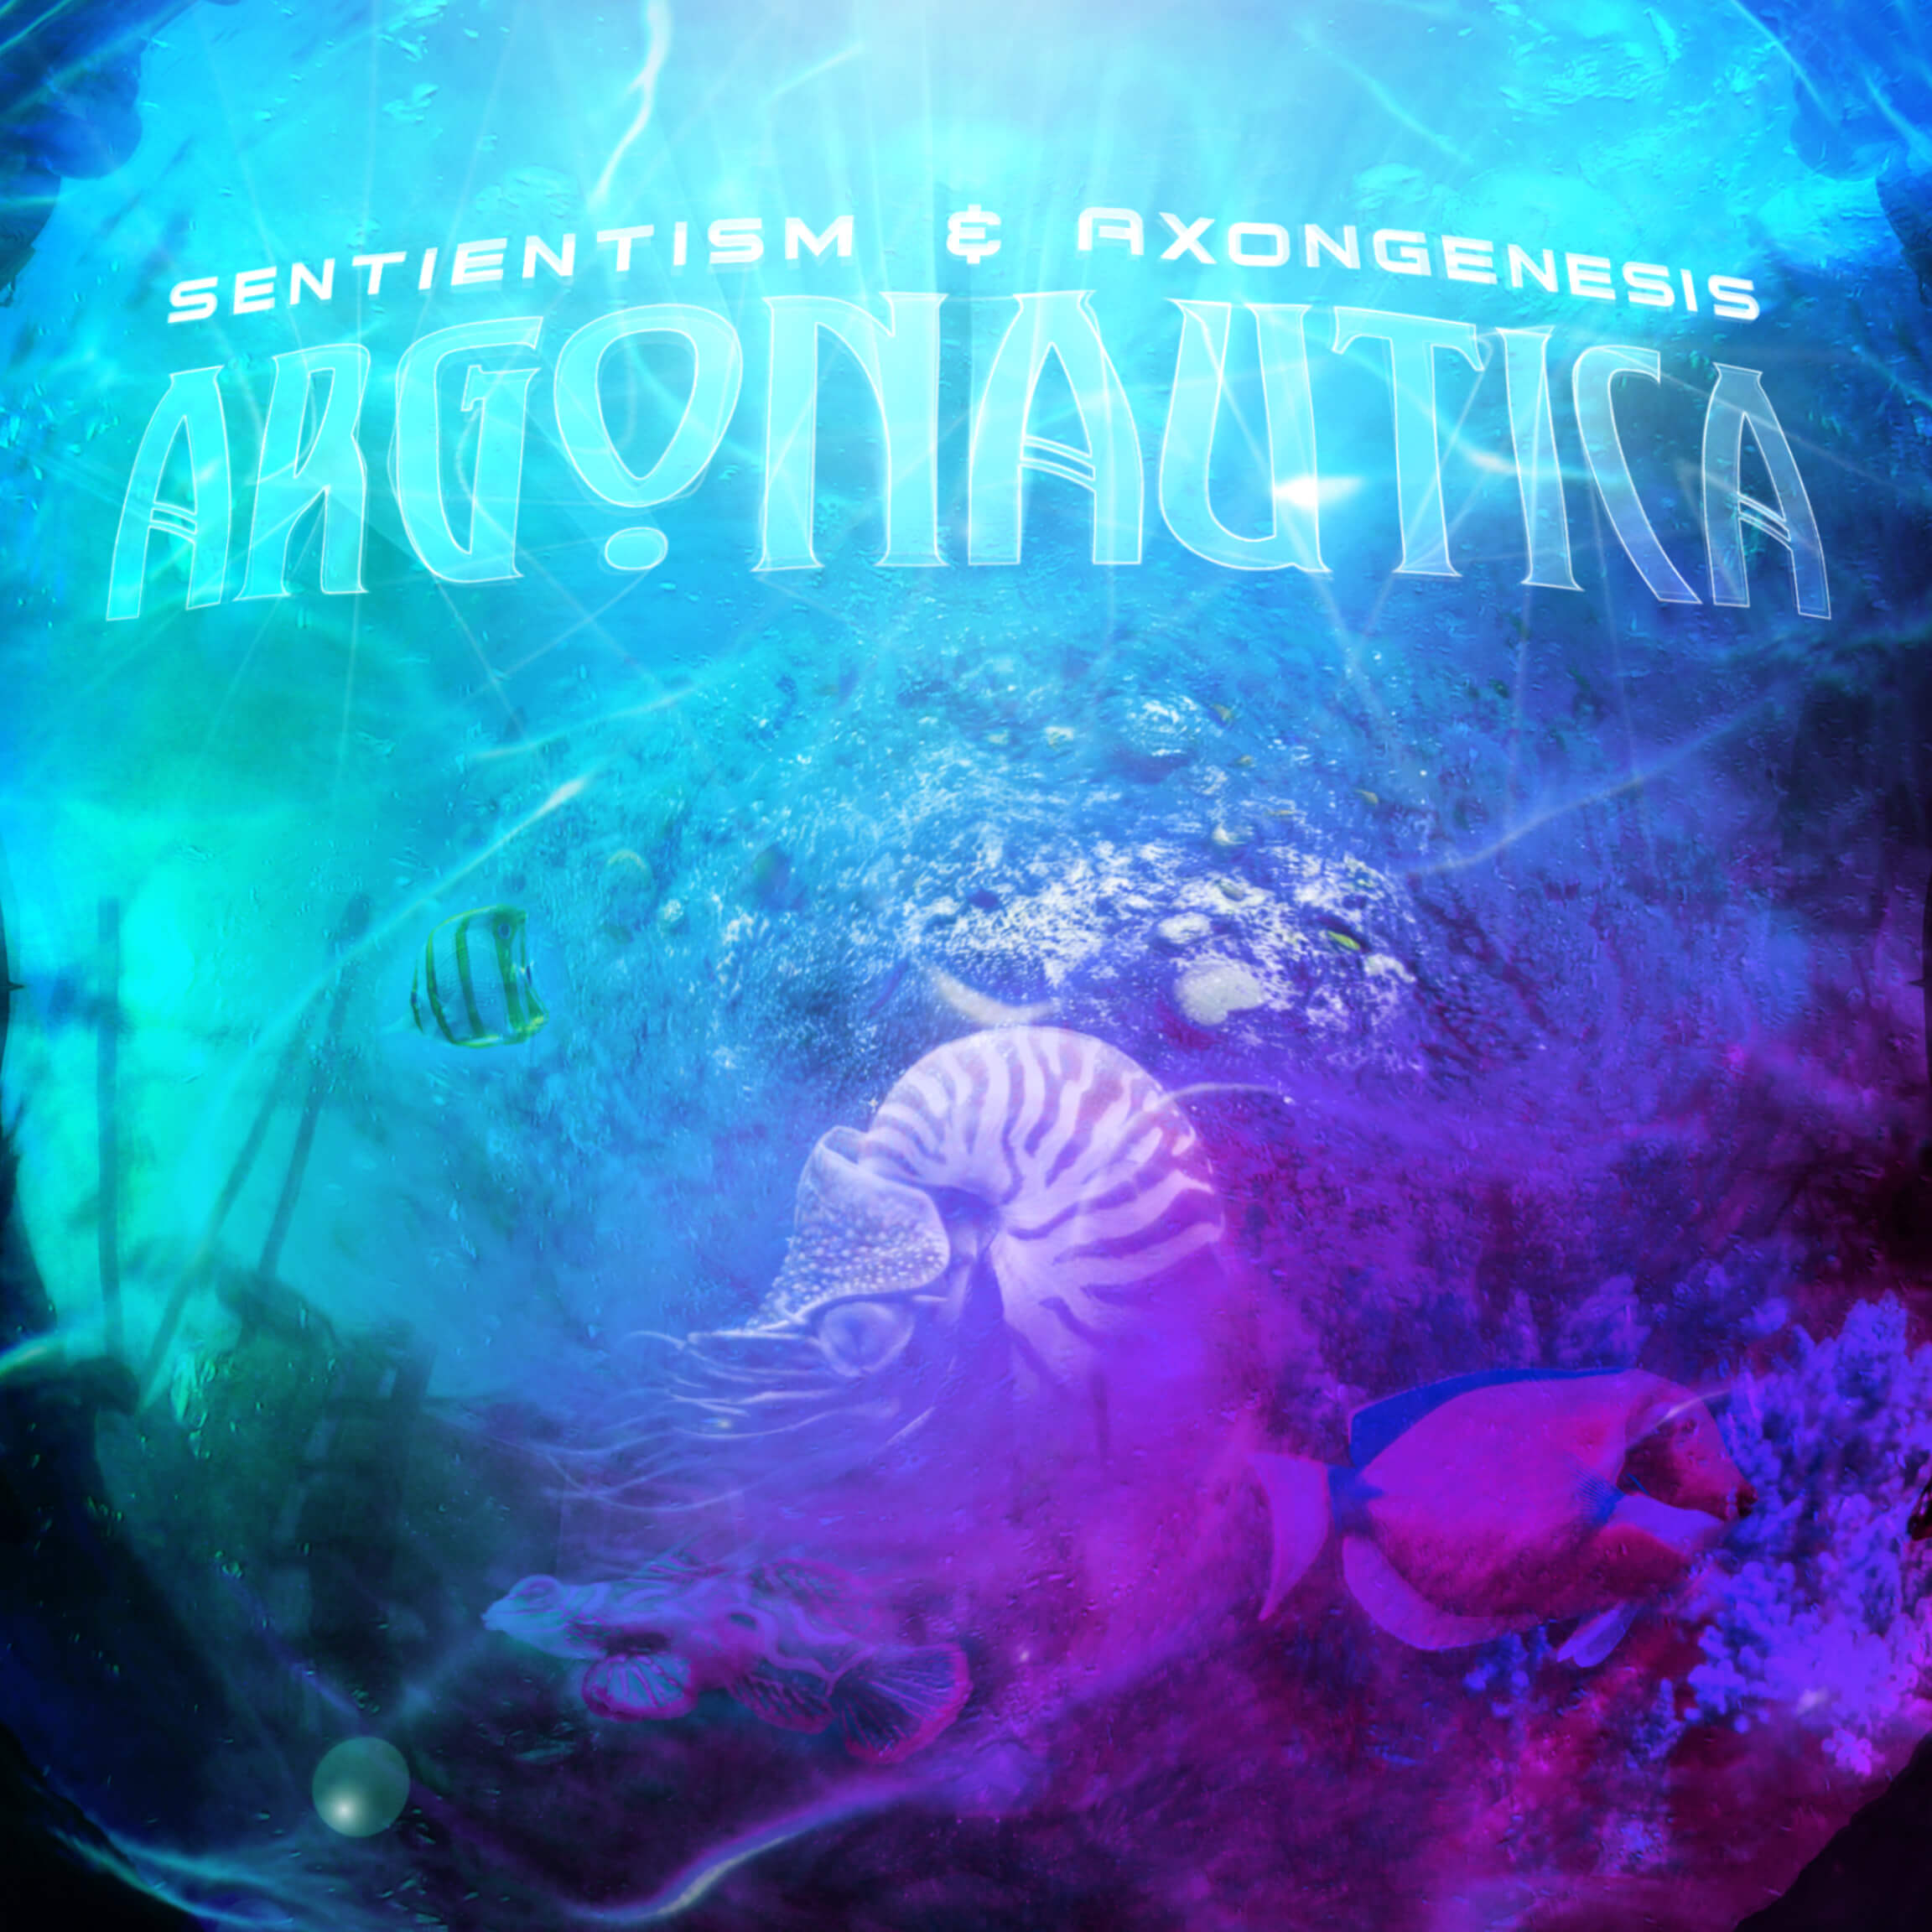 Argonautica Cover Art by Axon Genesis